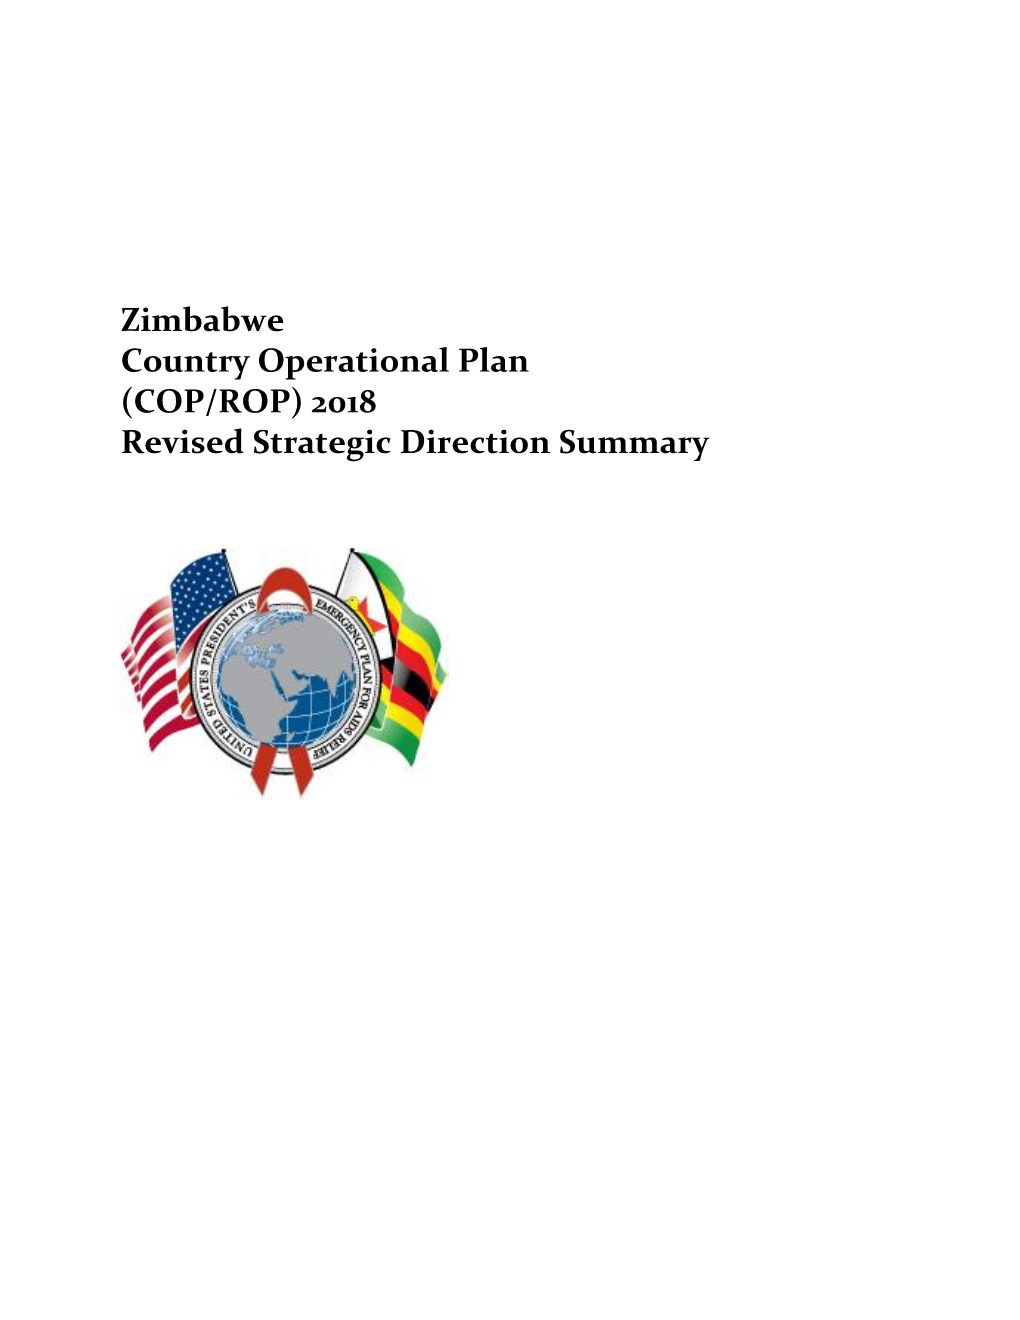 Zimbabwe Country Operational Plan 2018 Strategic Direction Summary